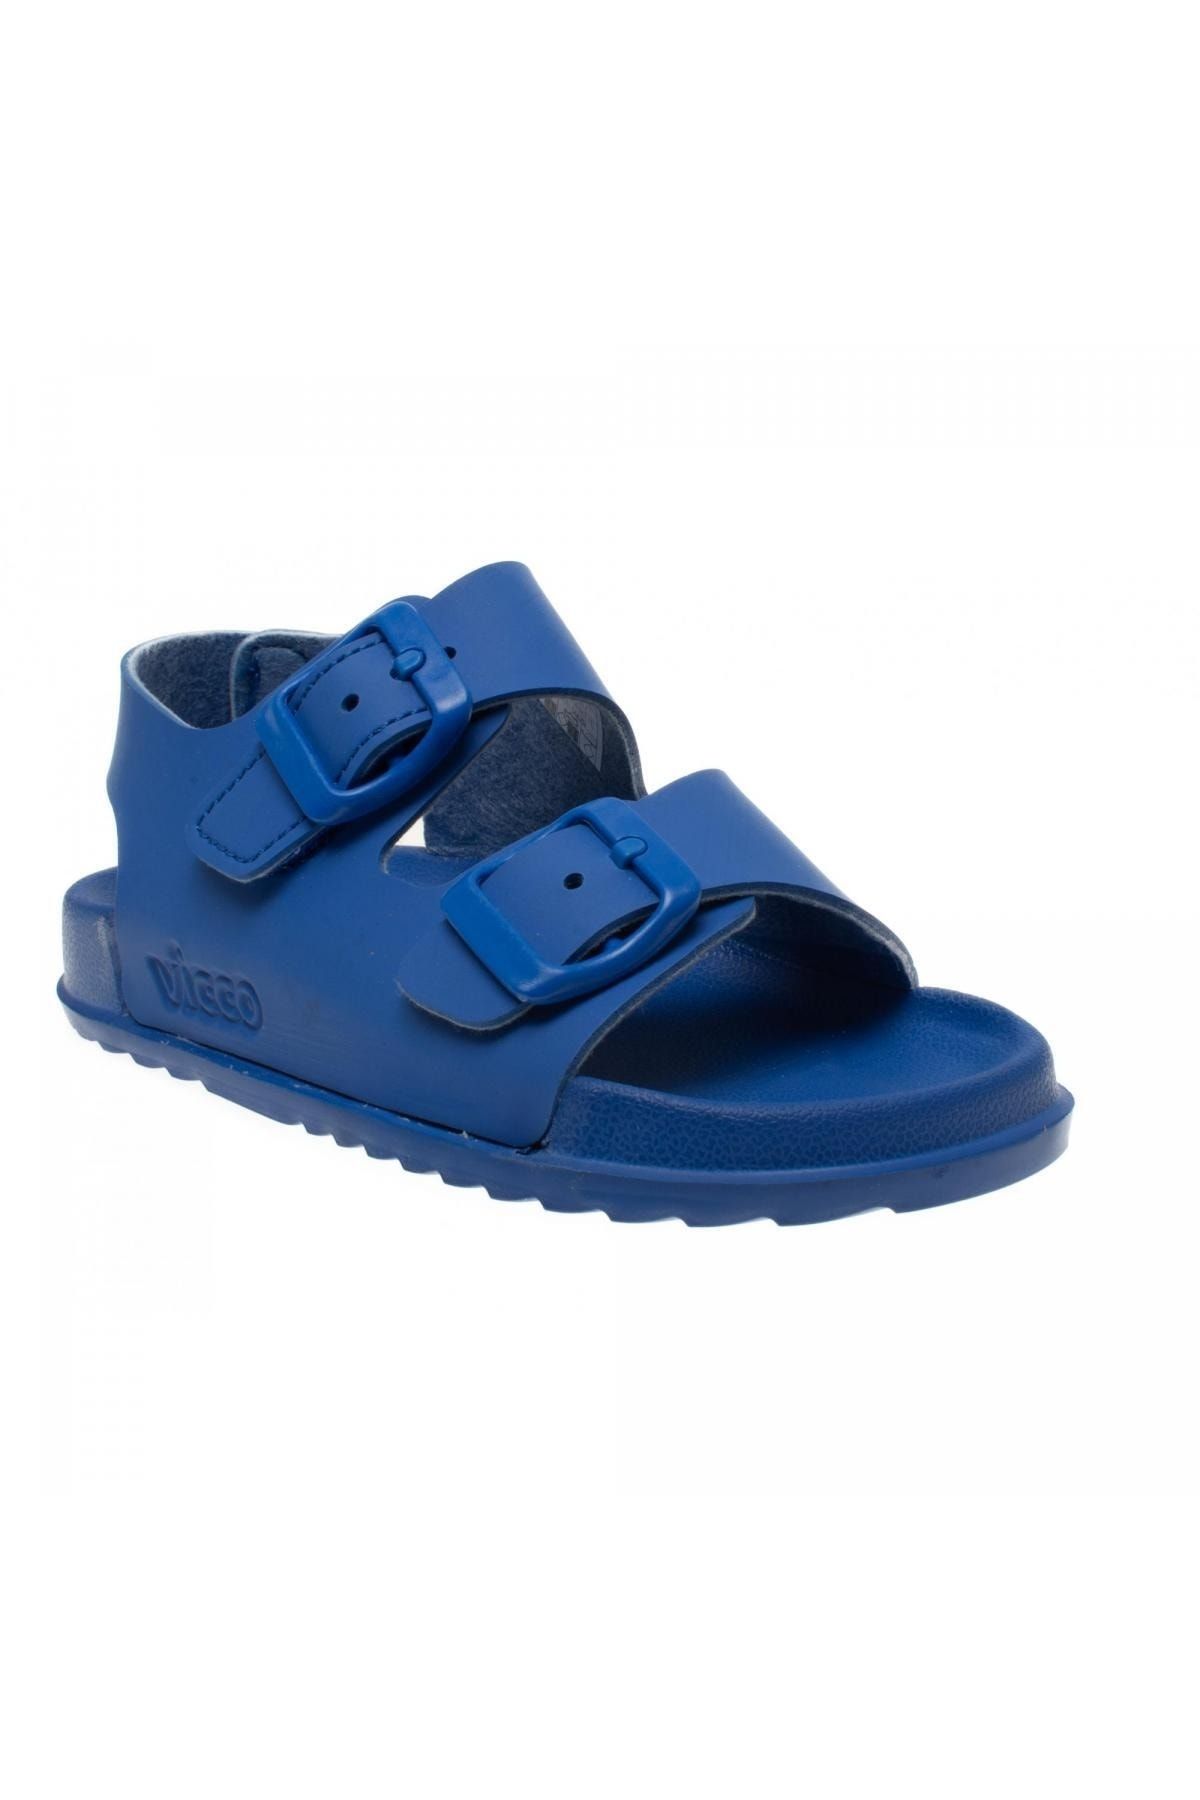 Vicco Bebe Phylon Mavi Çocuk Sandalet